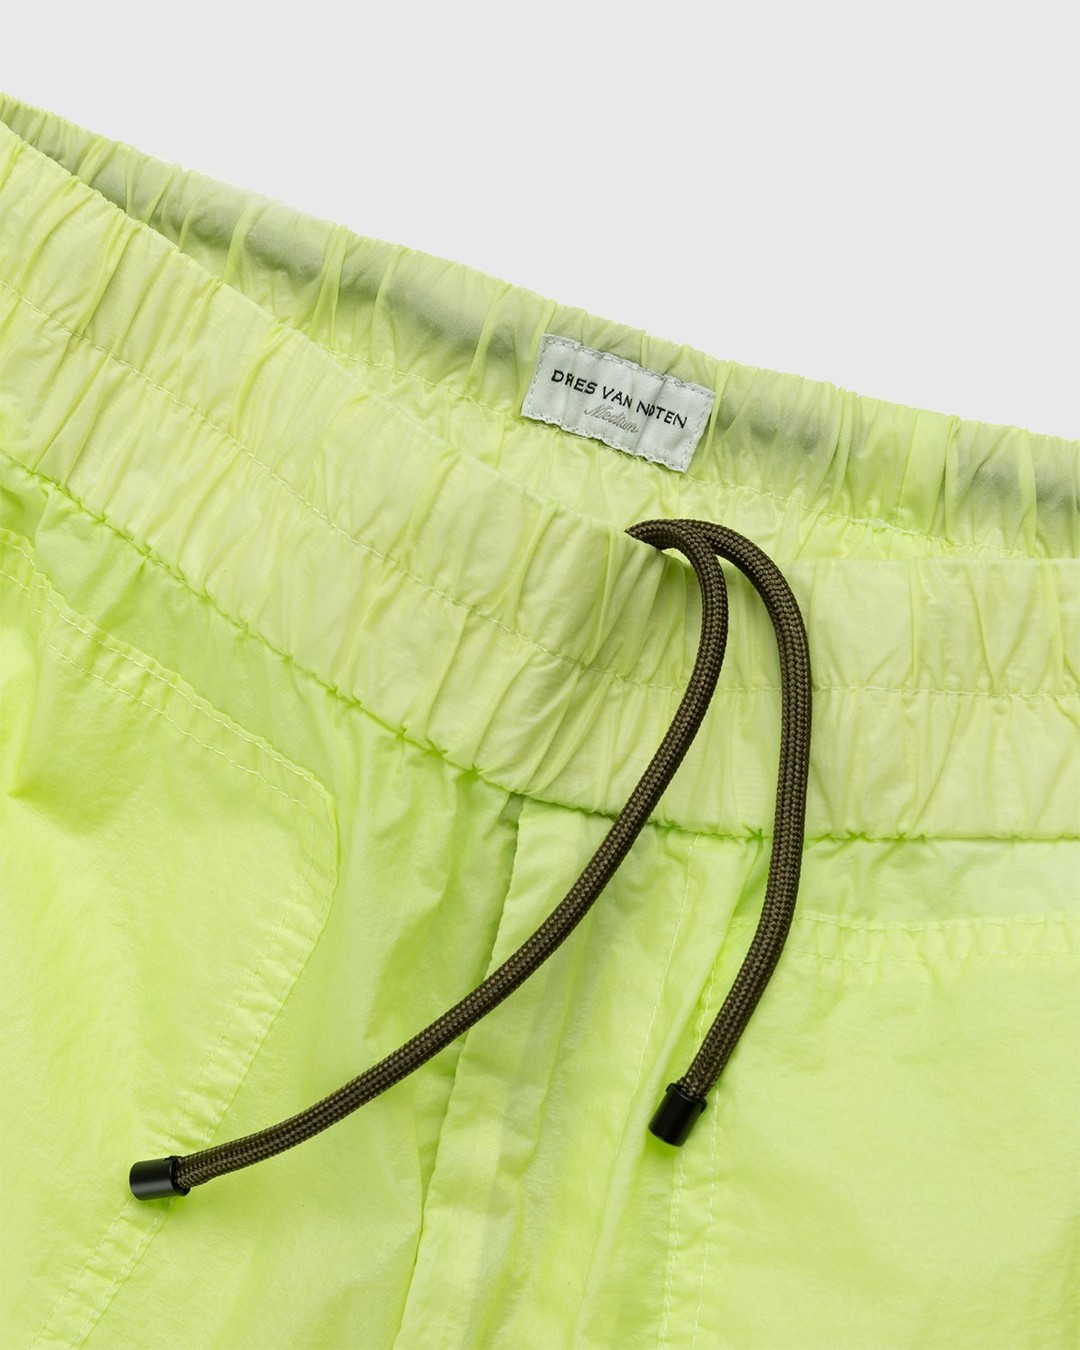 Dries van Noten – Pooles Shorts Lime - Shorts - Green - Image 5